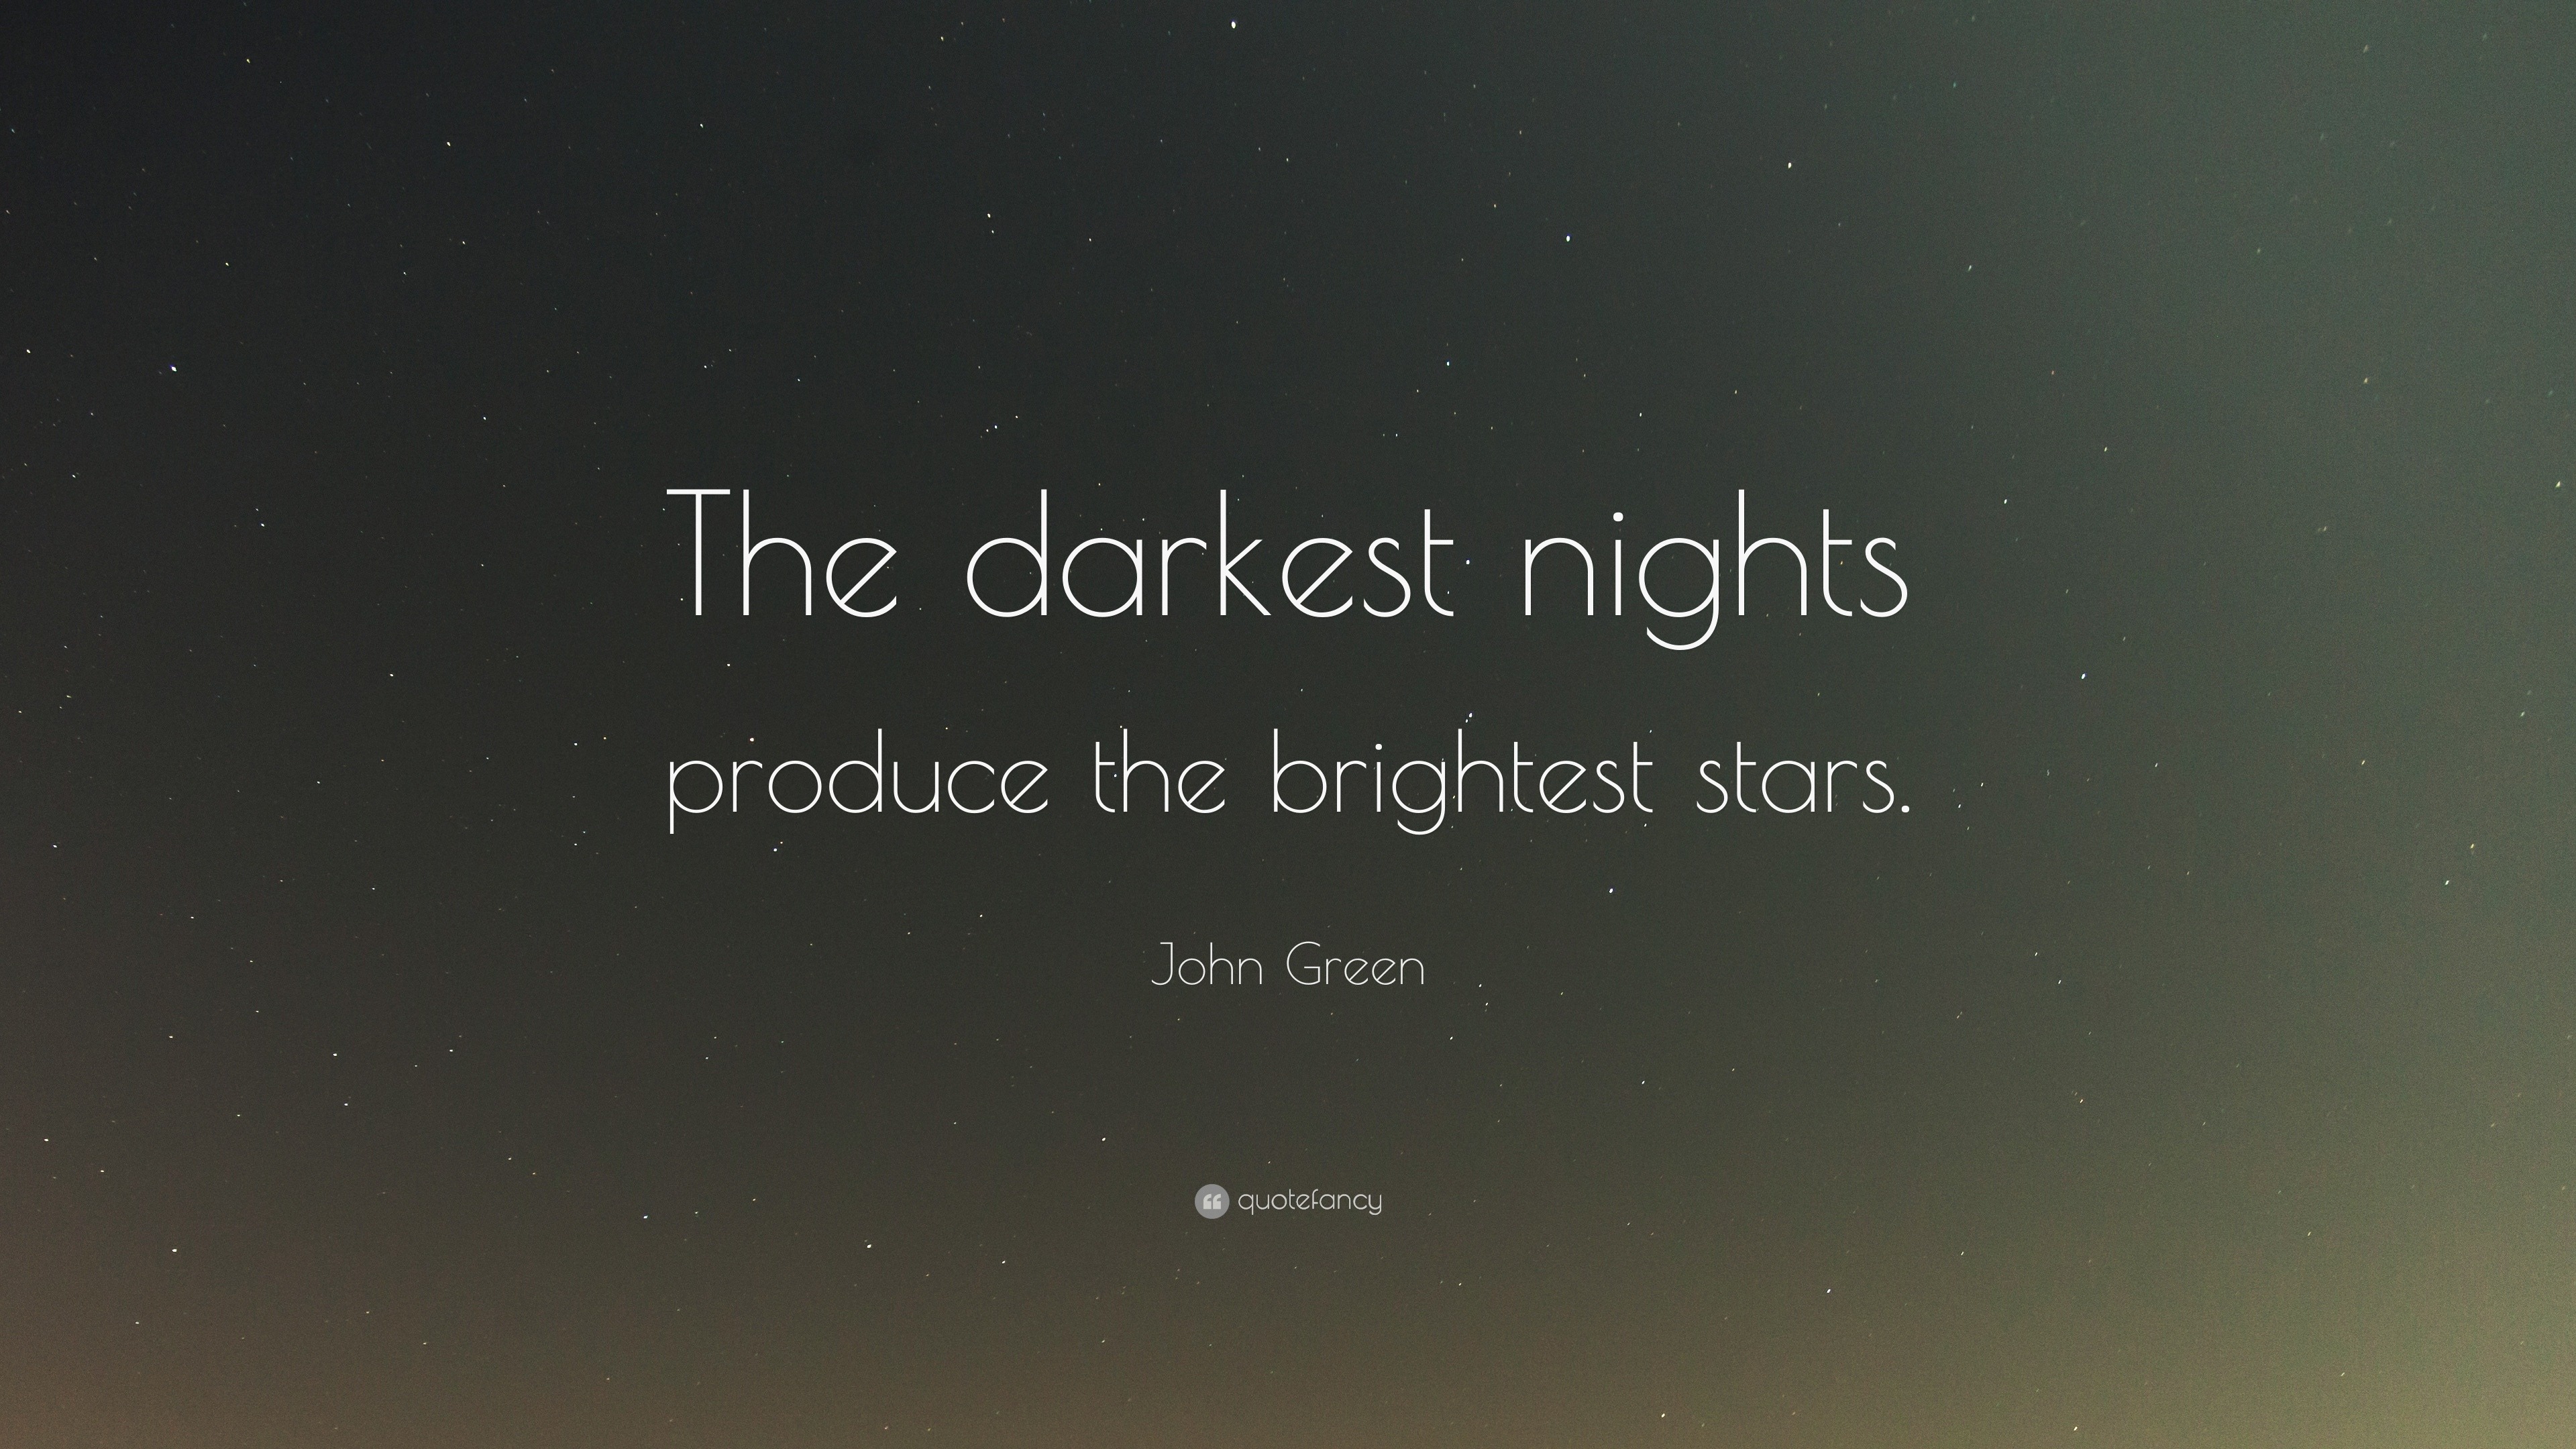 John Green Quote: “The darkest nights produce the brightest stars.”